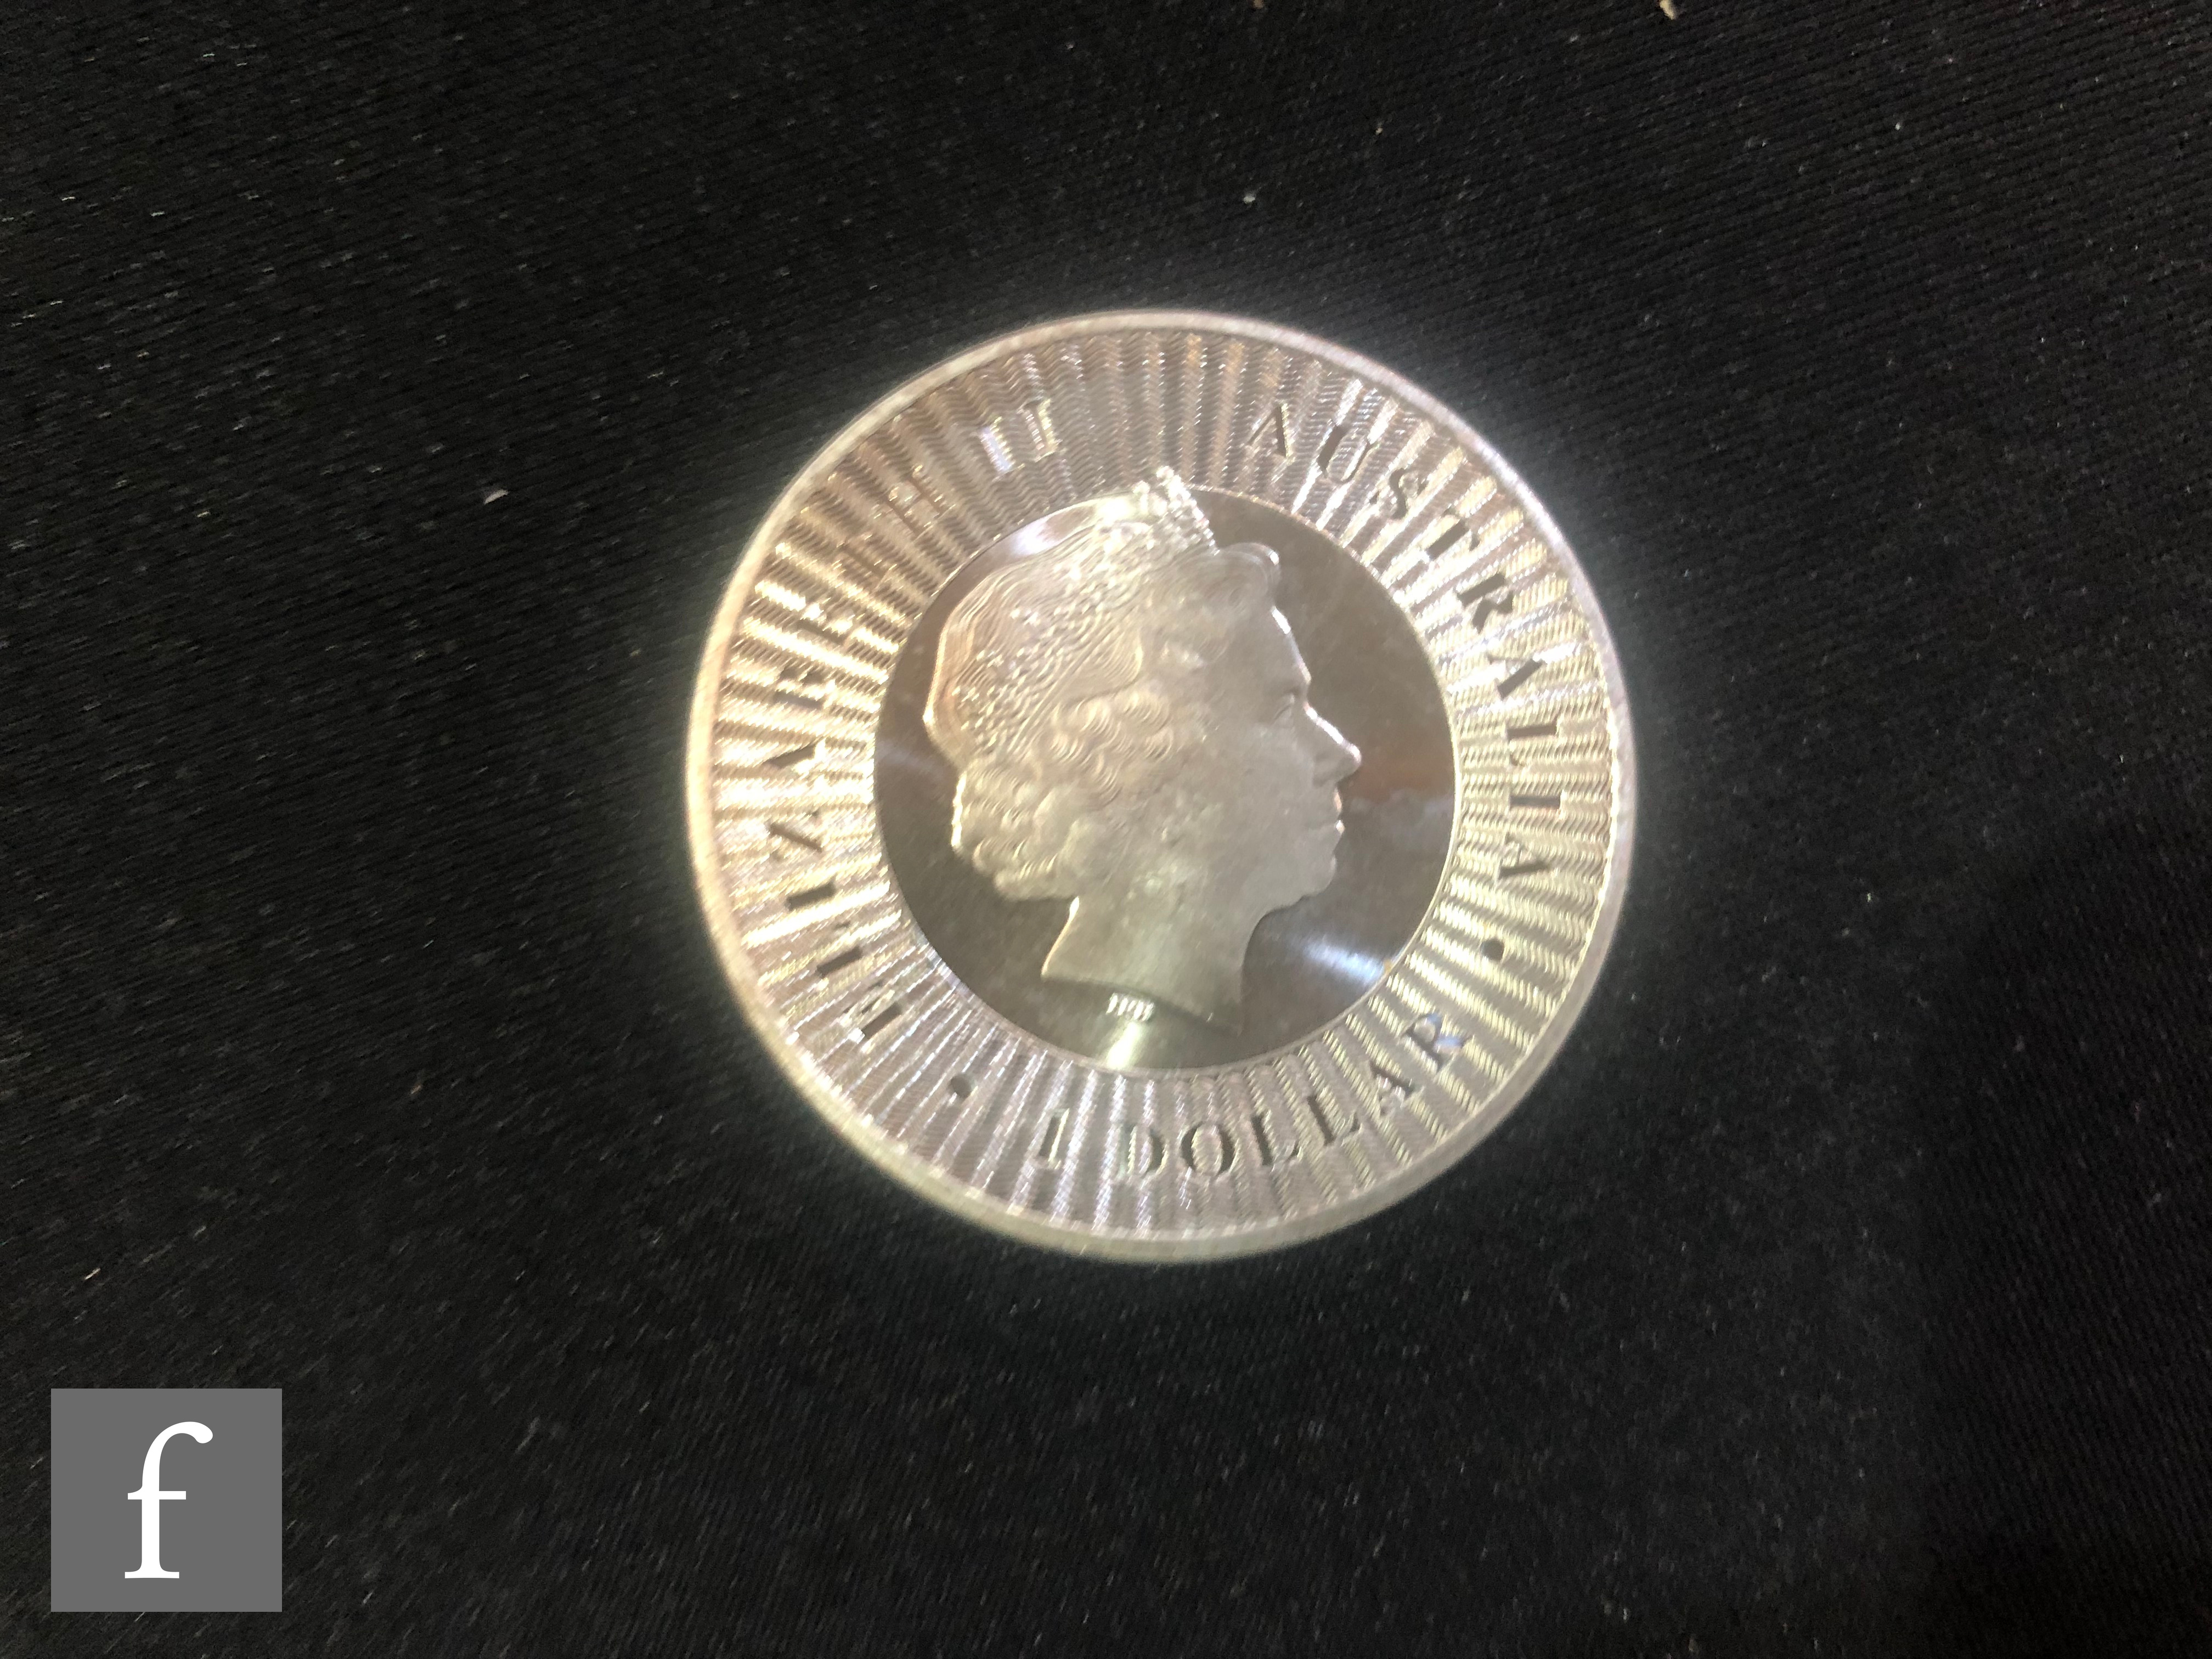 An Elizabeth II 2014 Britannia silver proof coin cased, Australia one dollar silver Platypus, - Image 4 of 13